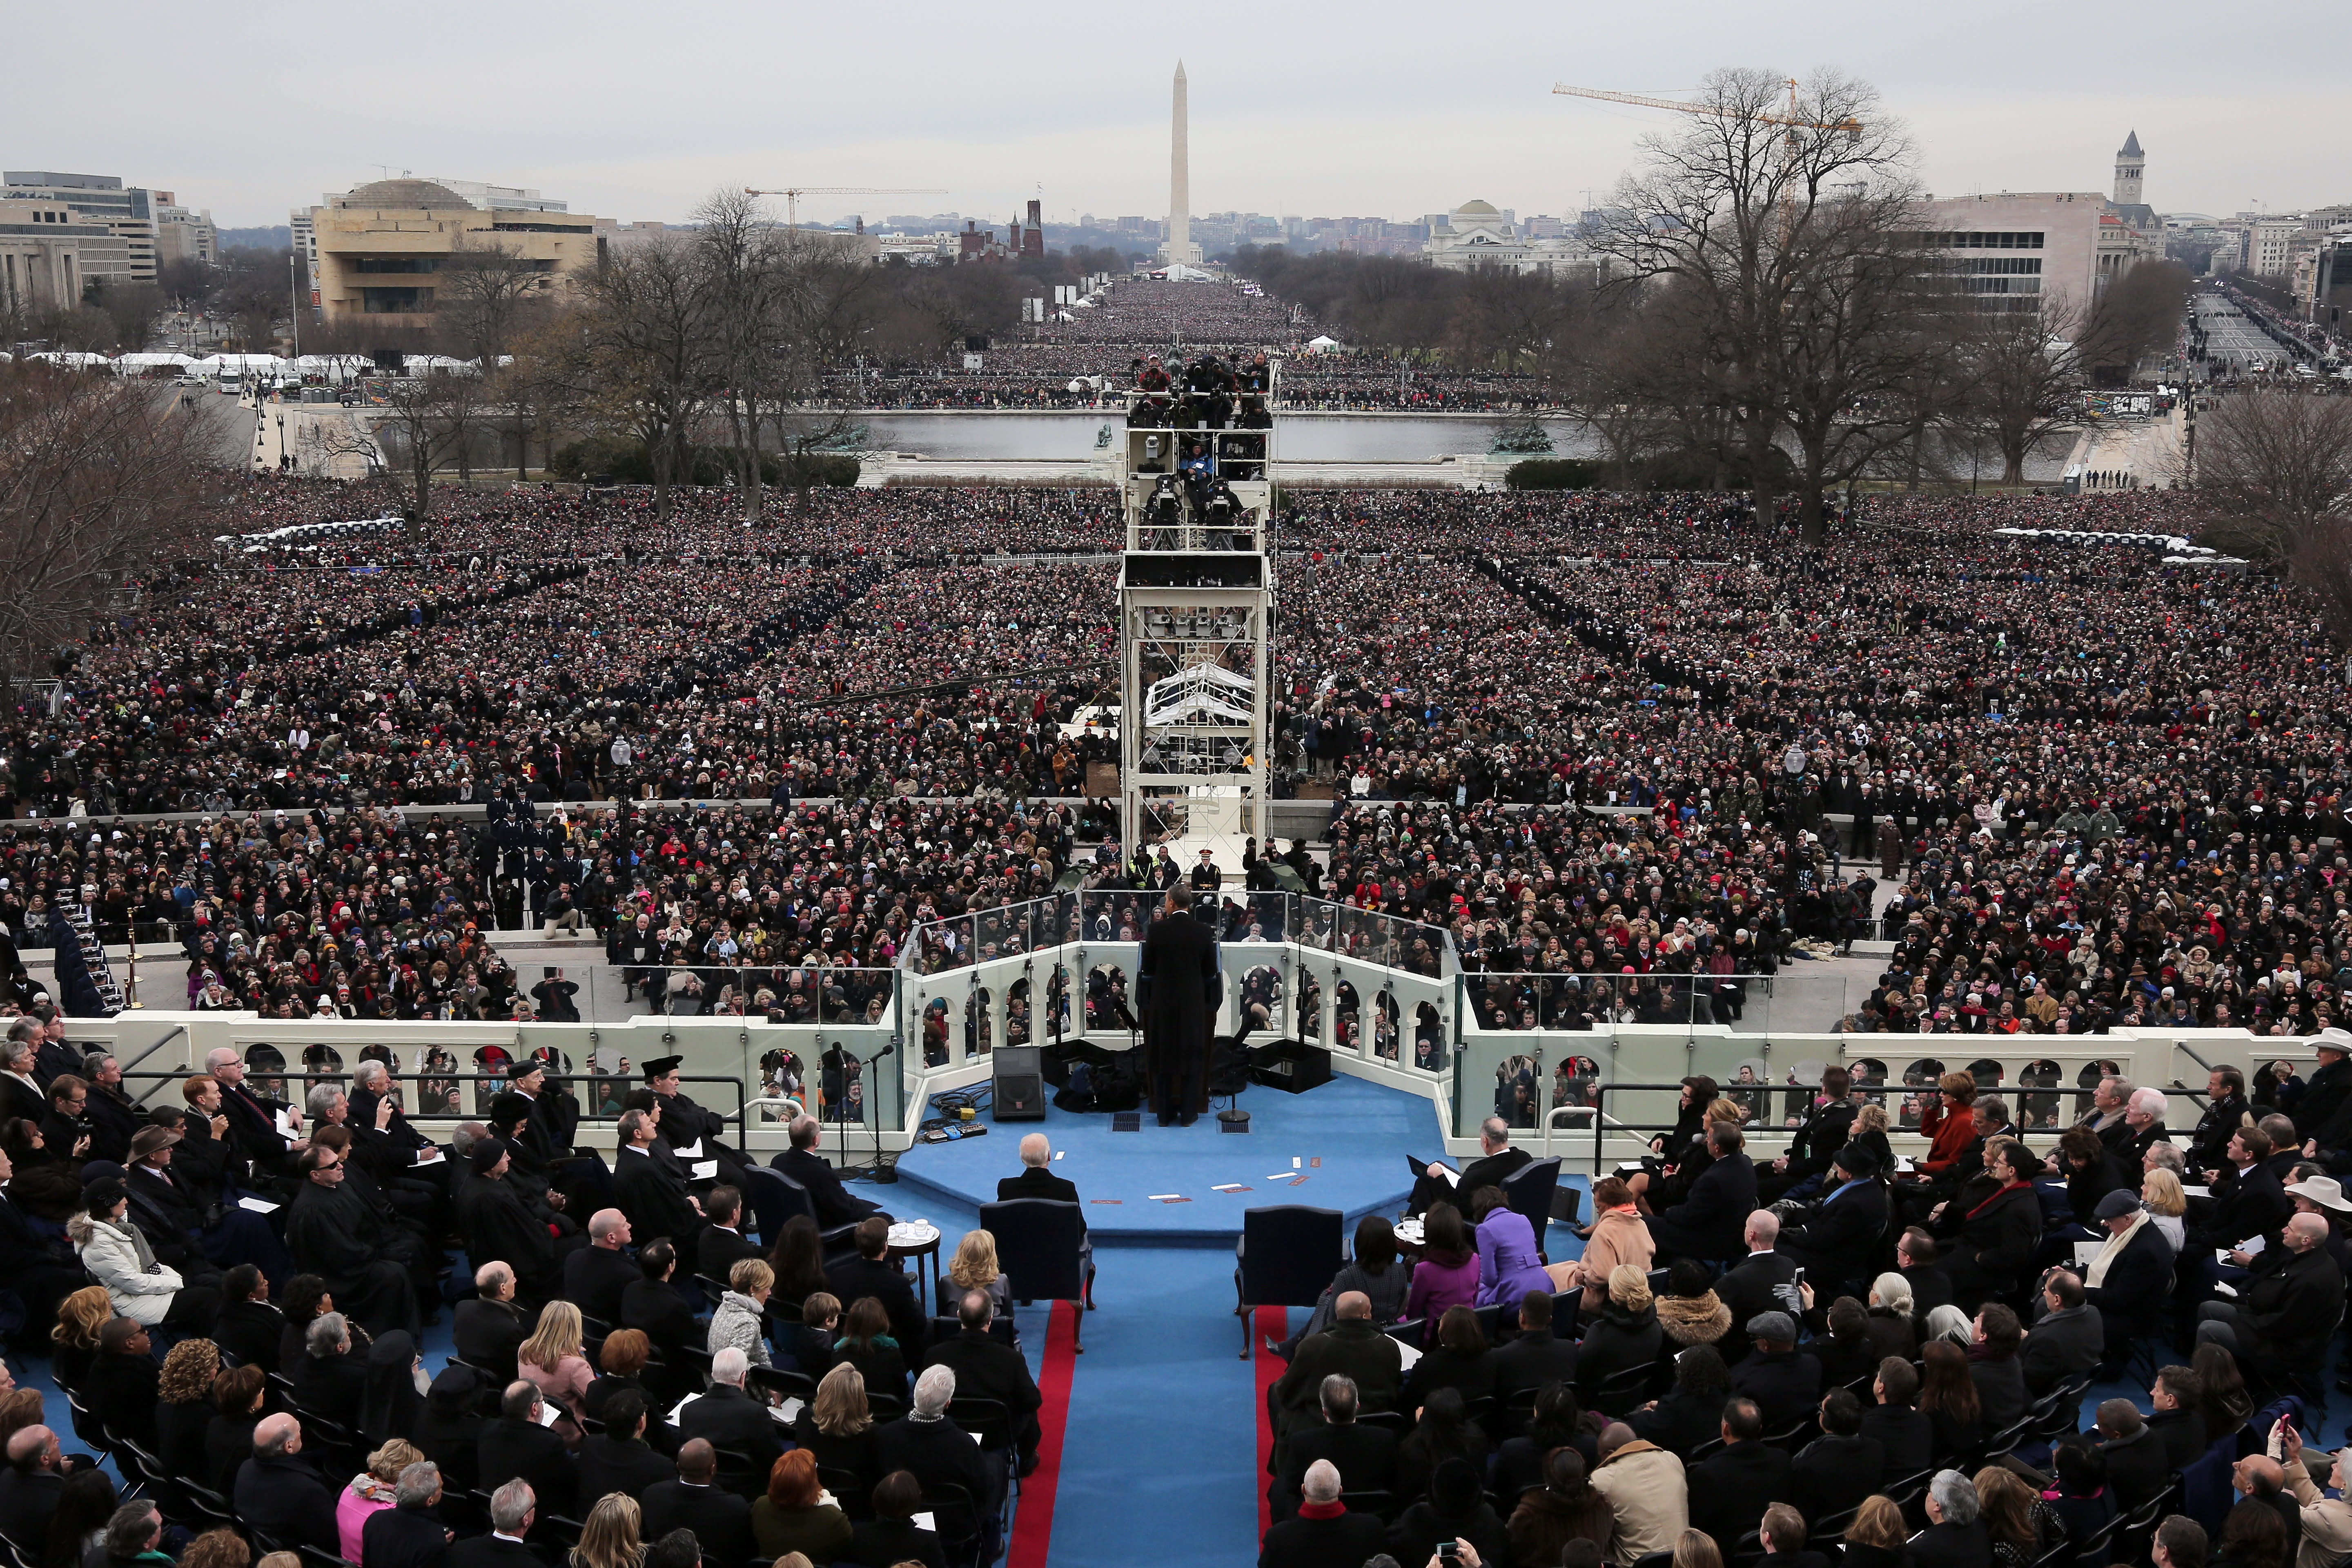 obama inauguration speech